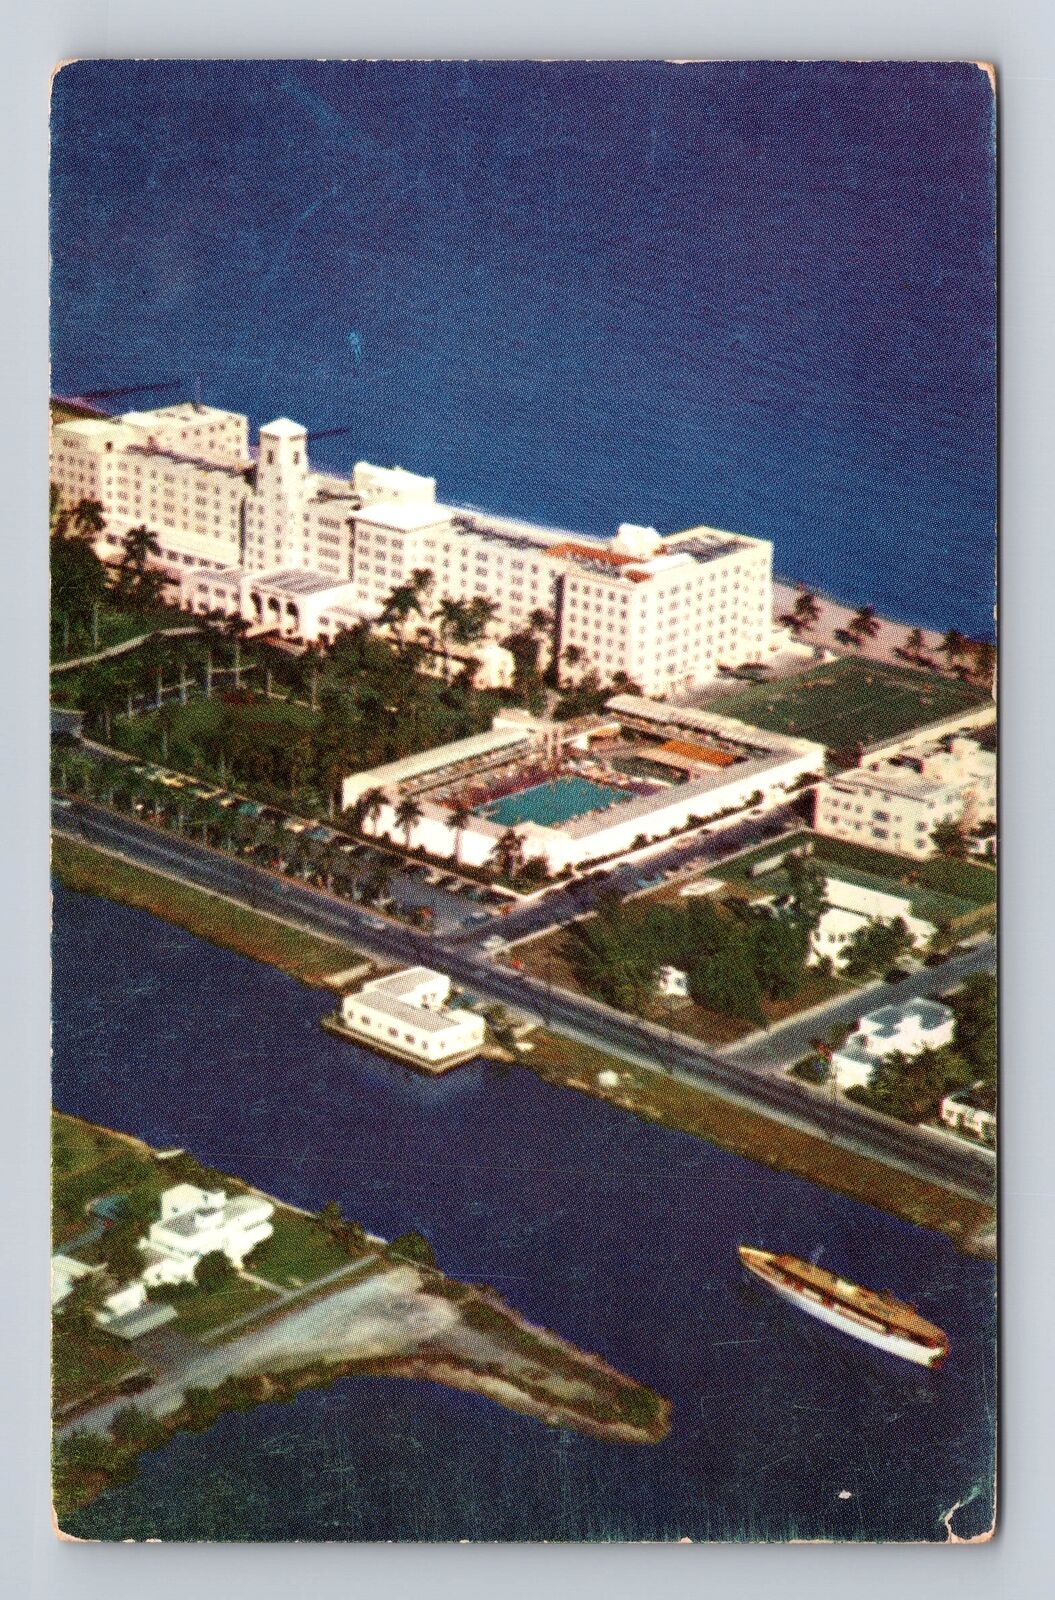 Hollywood FL-Florida, Hollywood Beach Hotel, Advertising Vintage Postcard